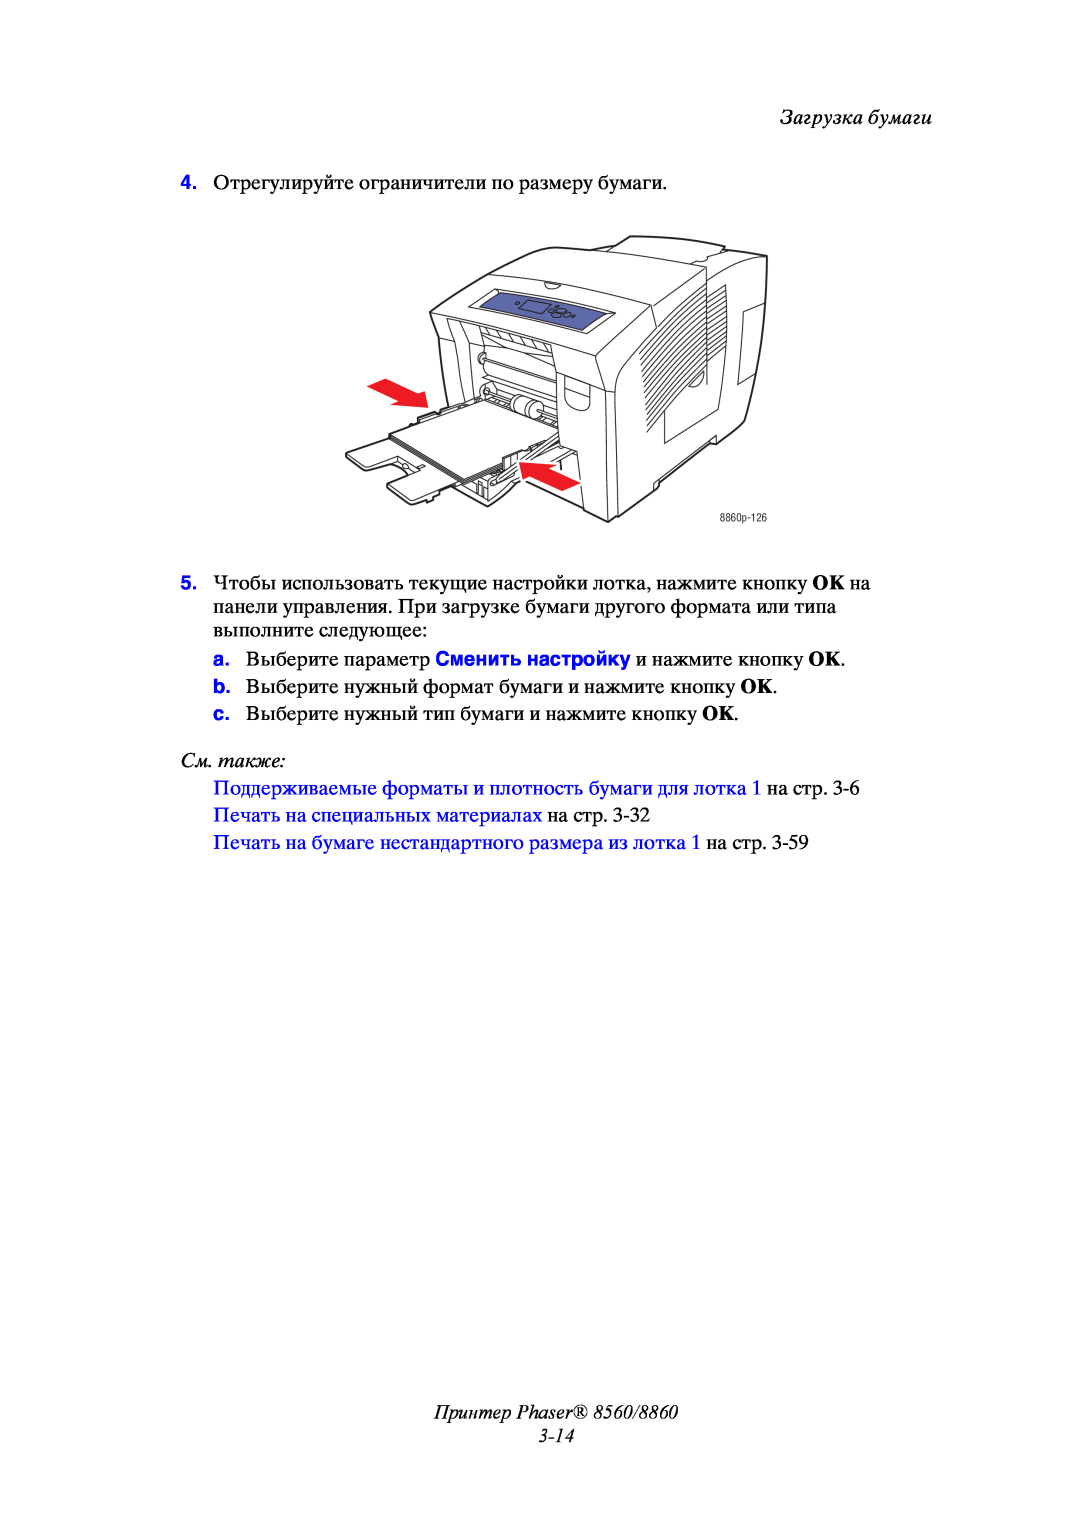 Xerox manual Принтер Phaser 8560/8860 3-14, Загрузка бумаги, 4. Отрегулируйте ограничители по размеру бумаги, См. также 